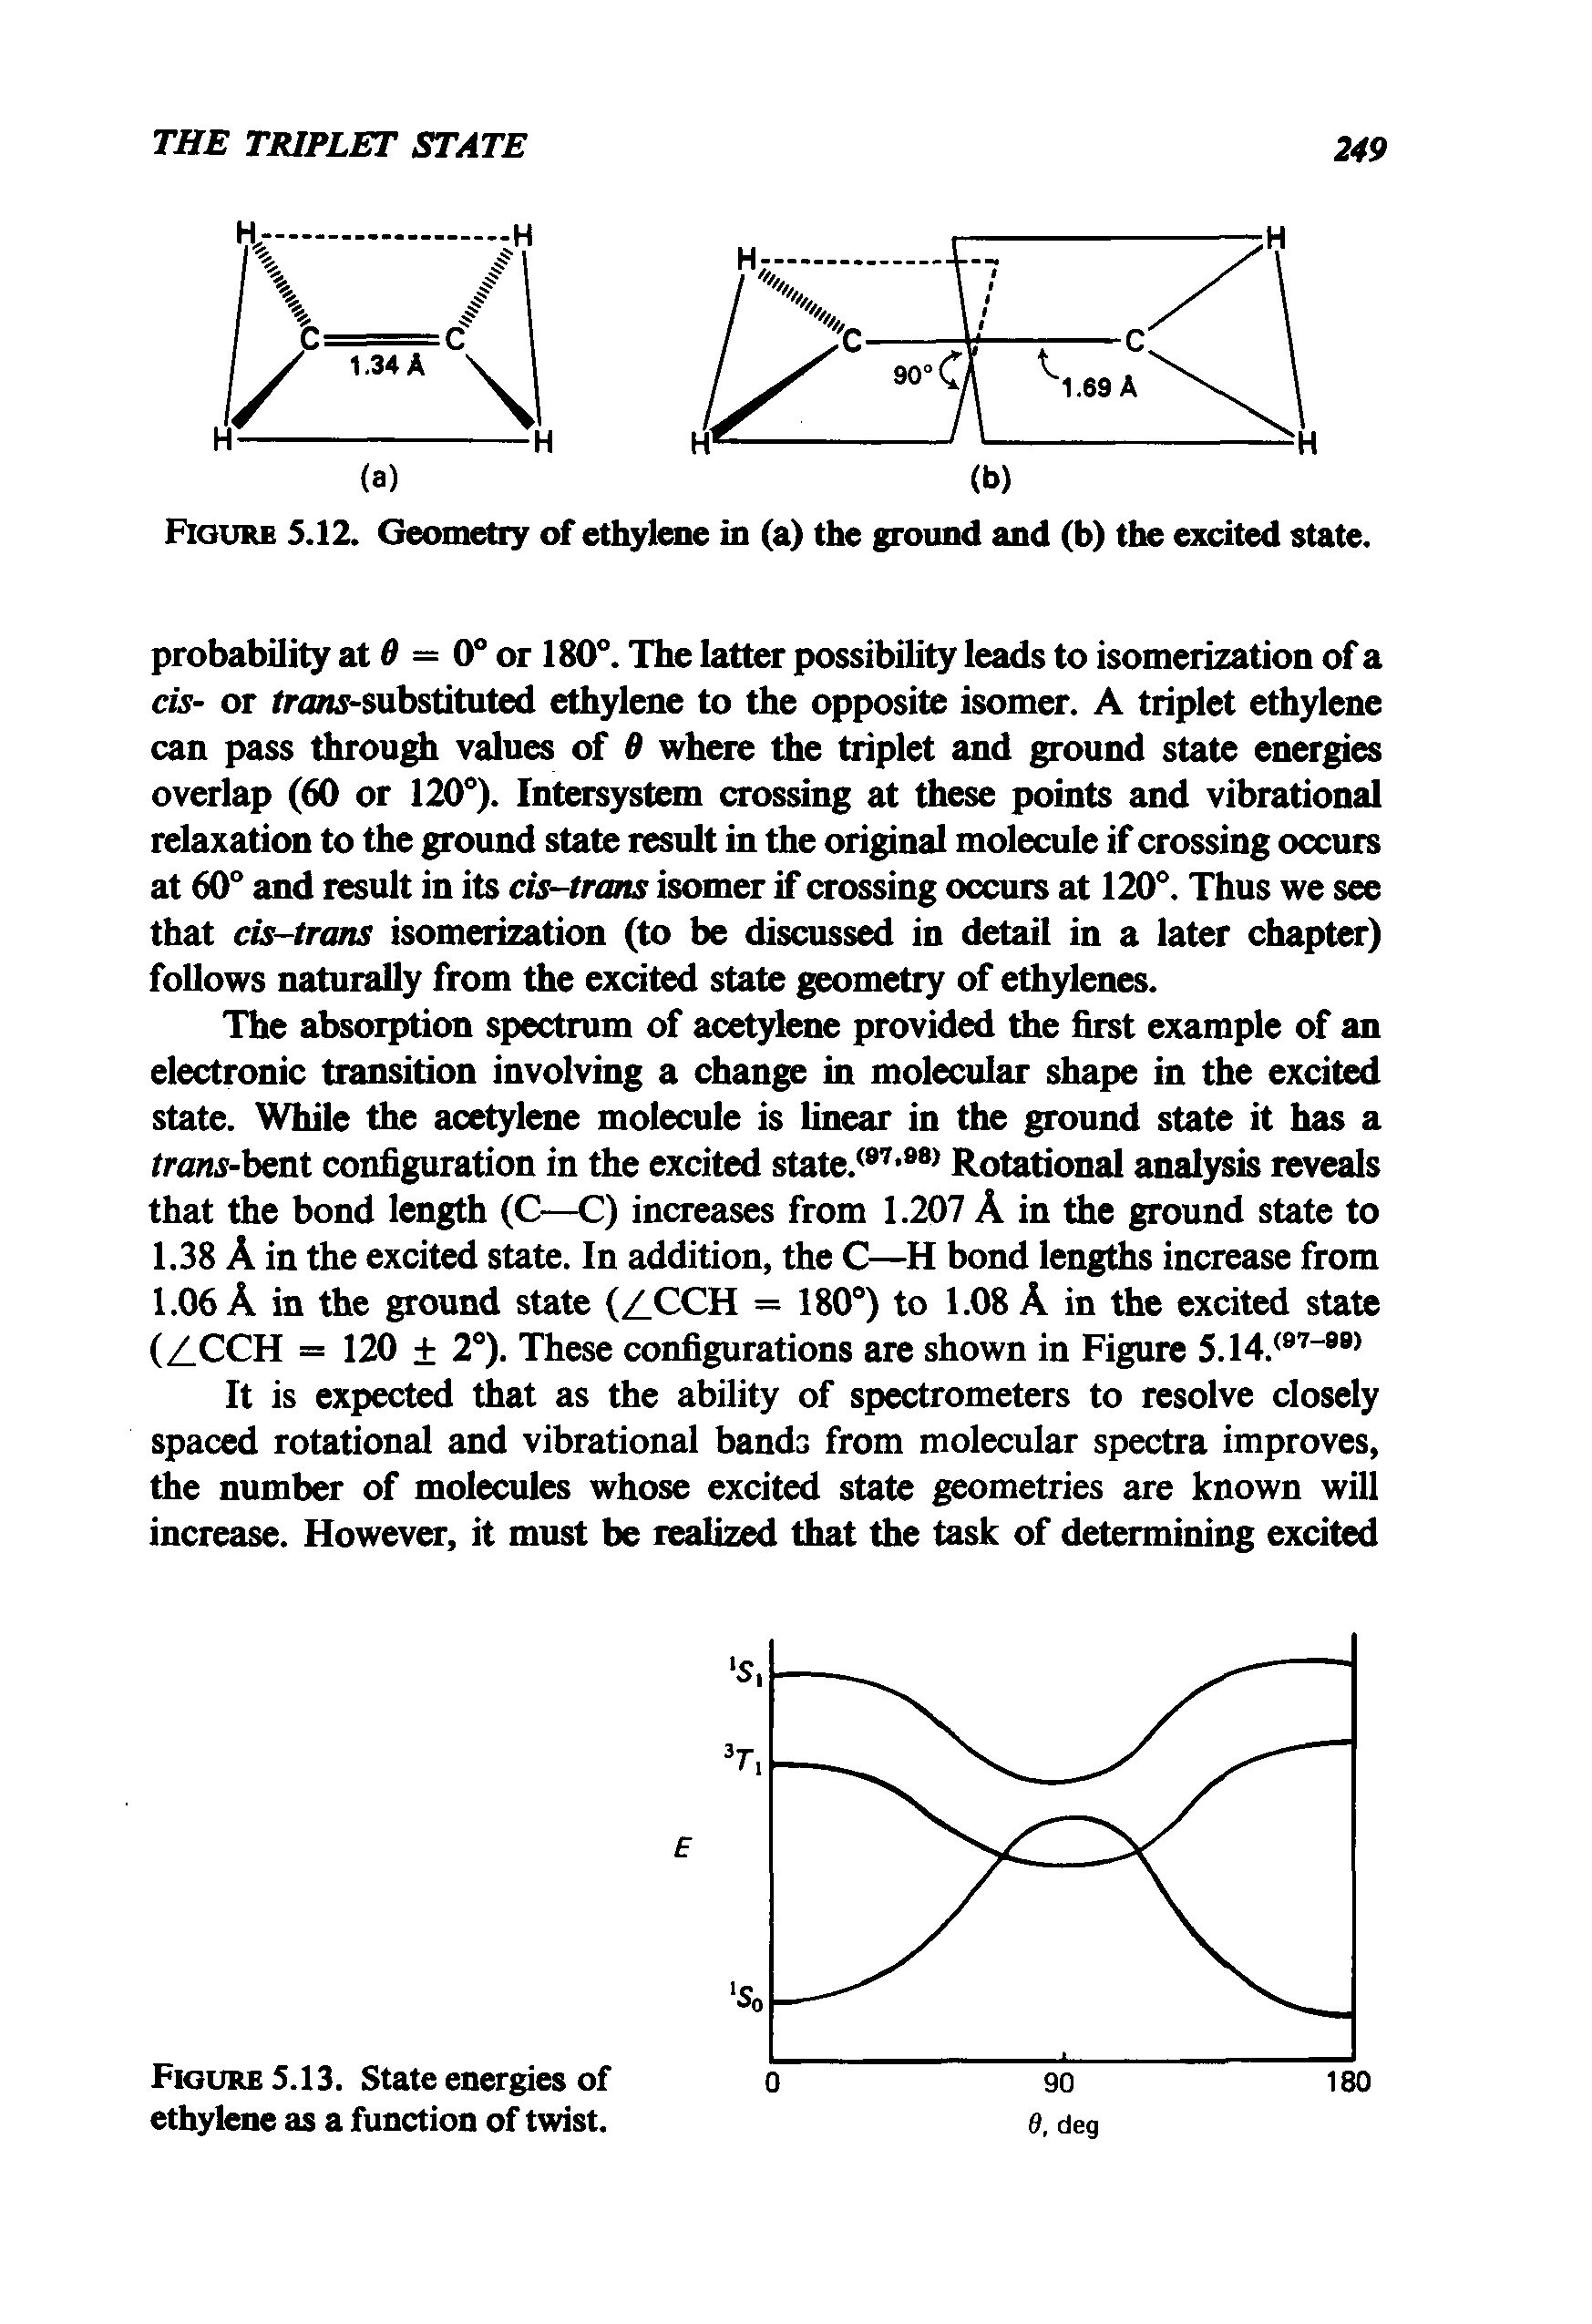 Figure 5.13. State energies of ethylene as a function of twist.